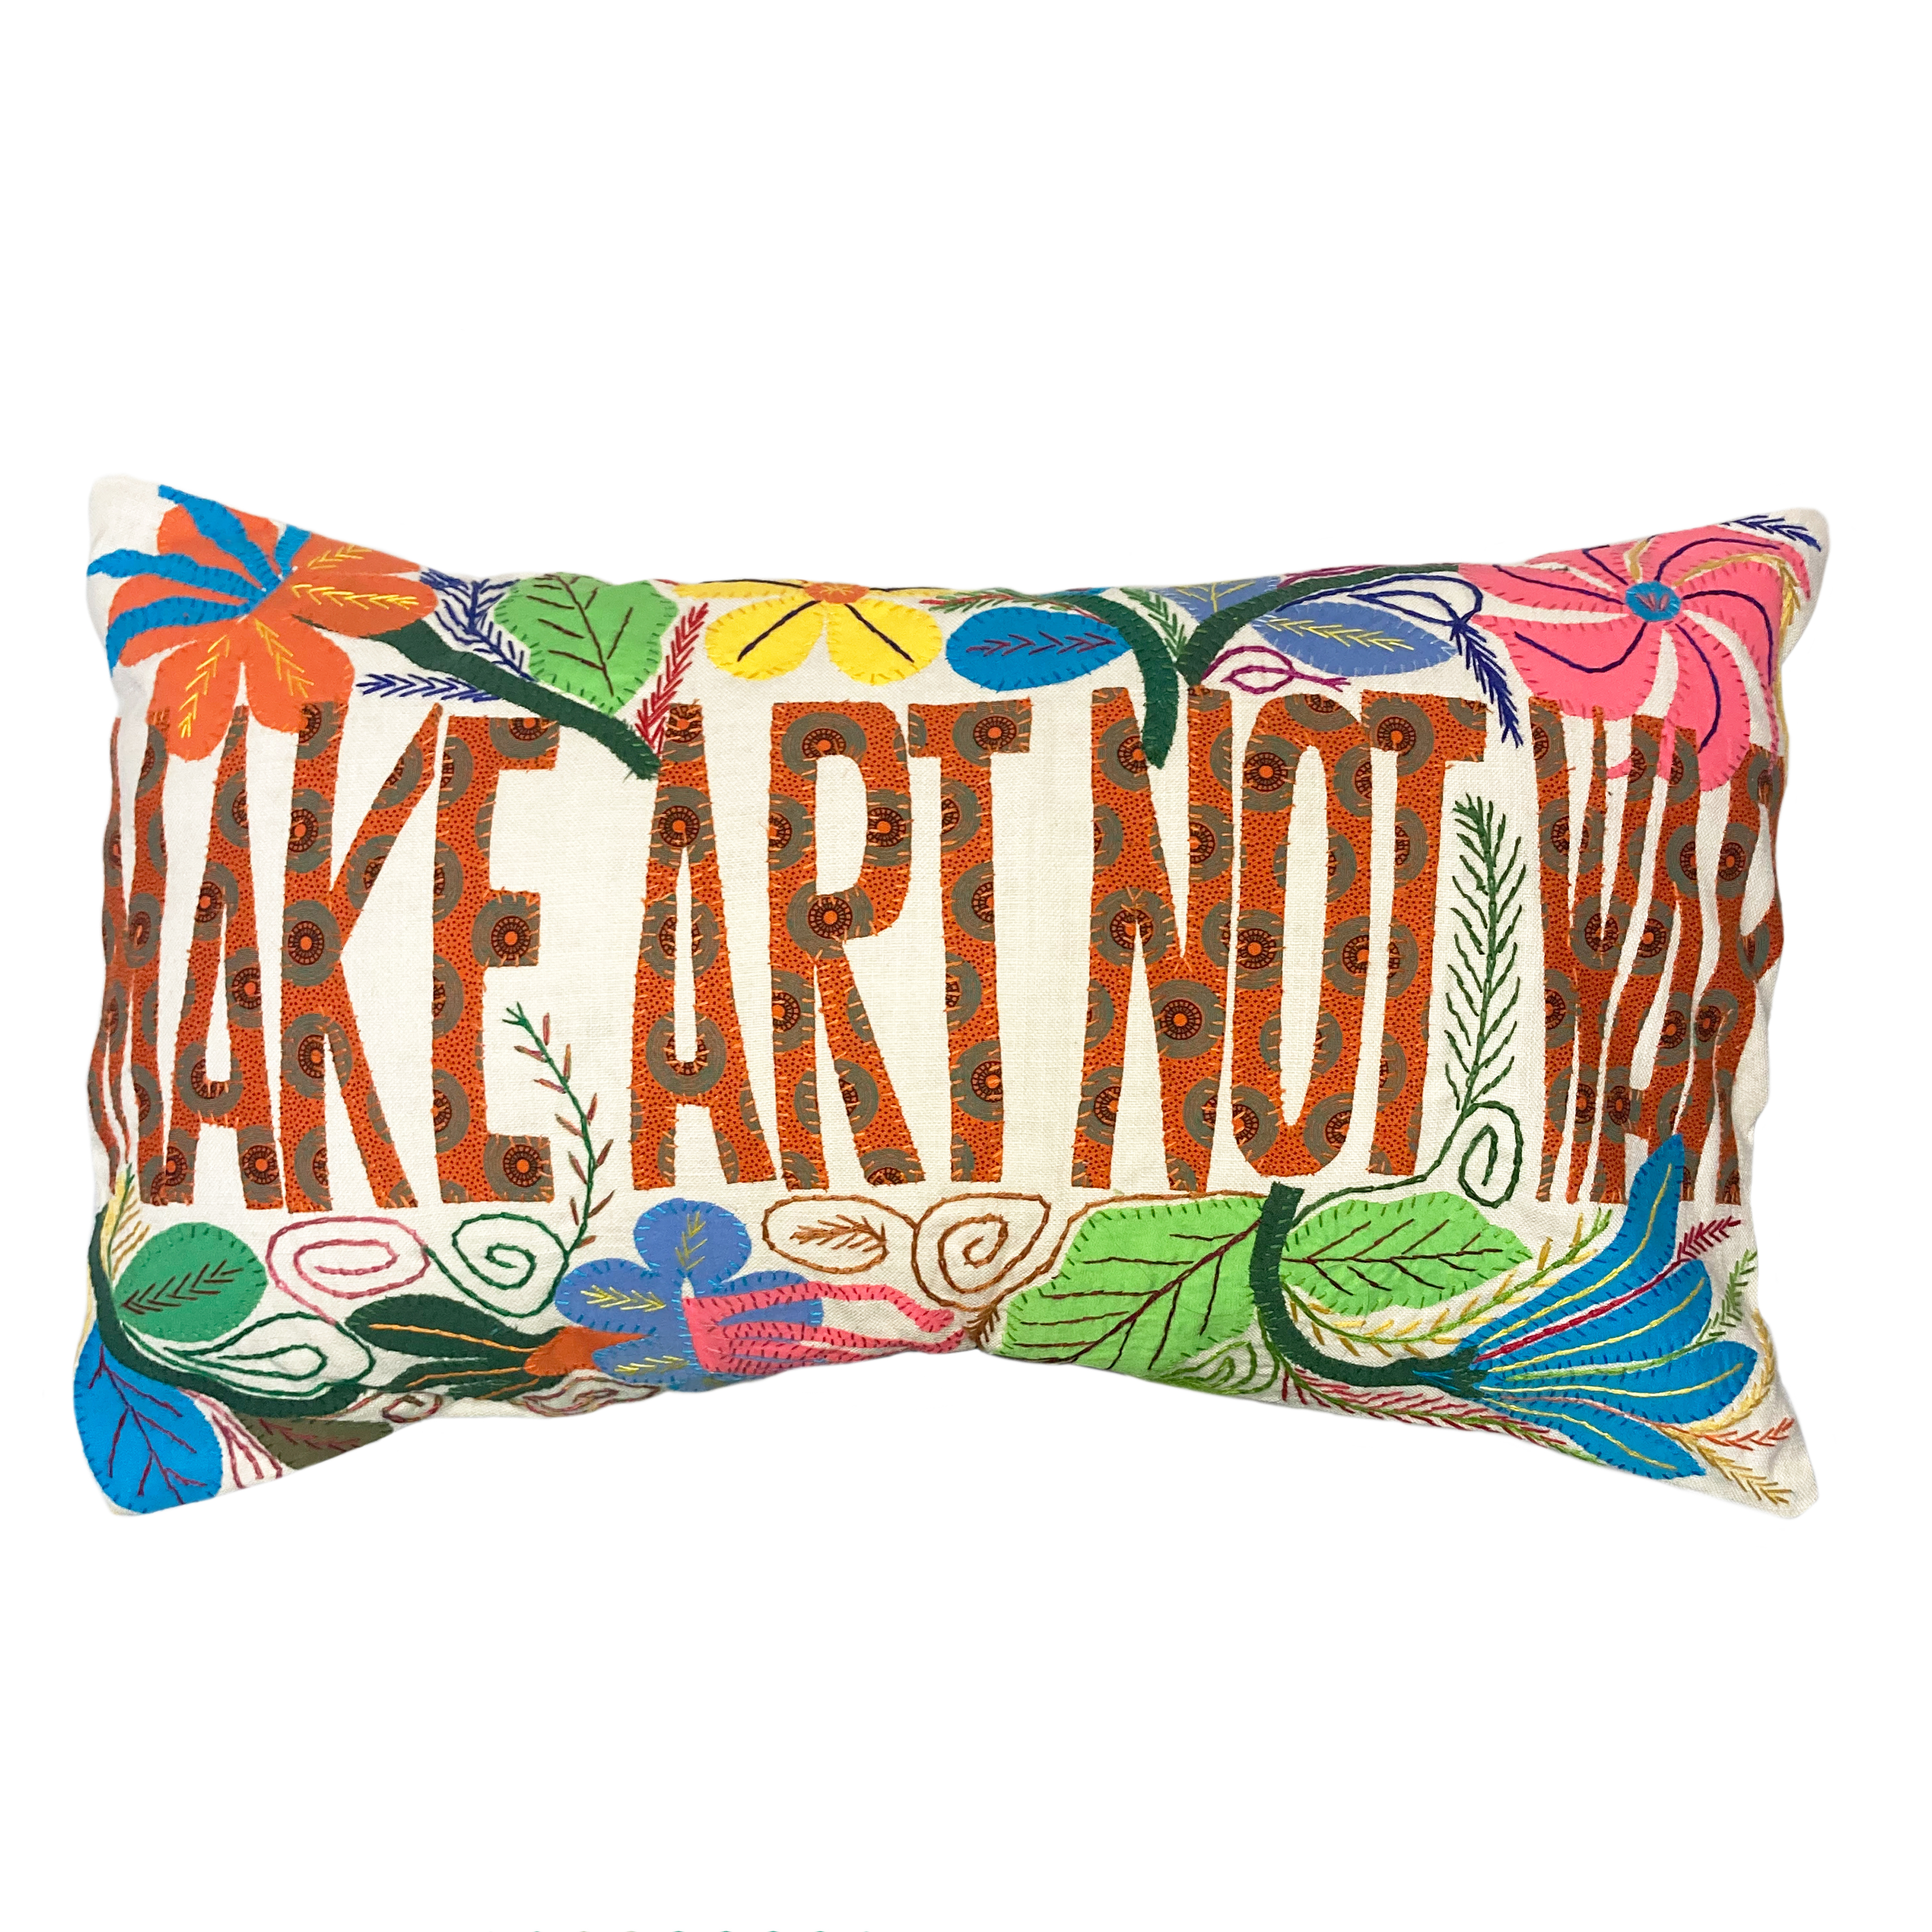 Mahatsara 'Make Art Not War' Hand Embroidered Message Cushion